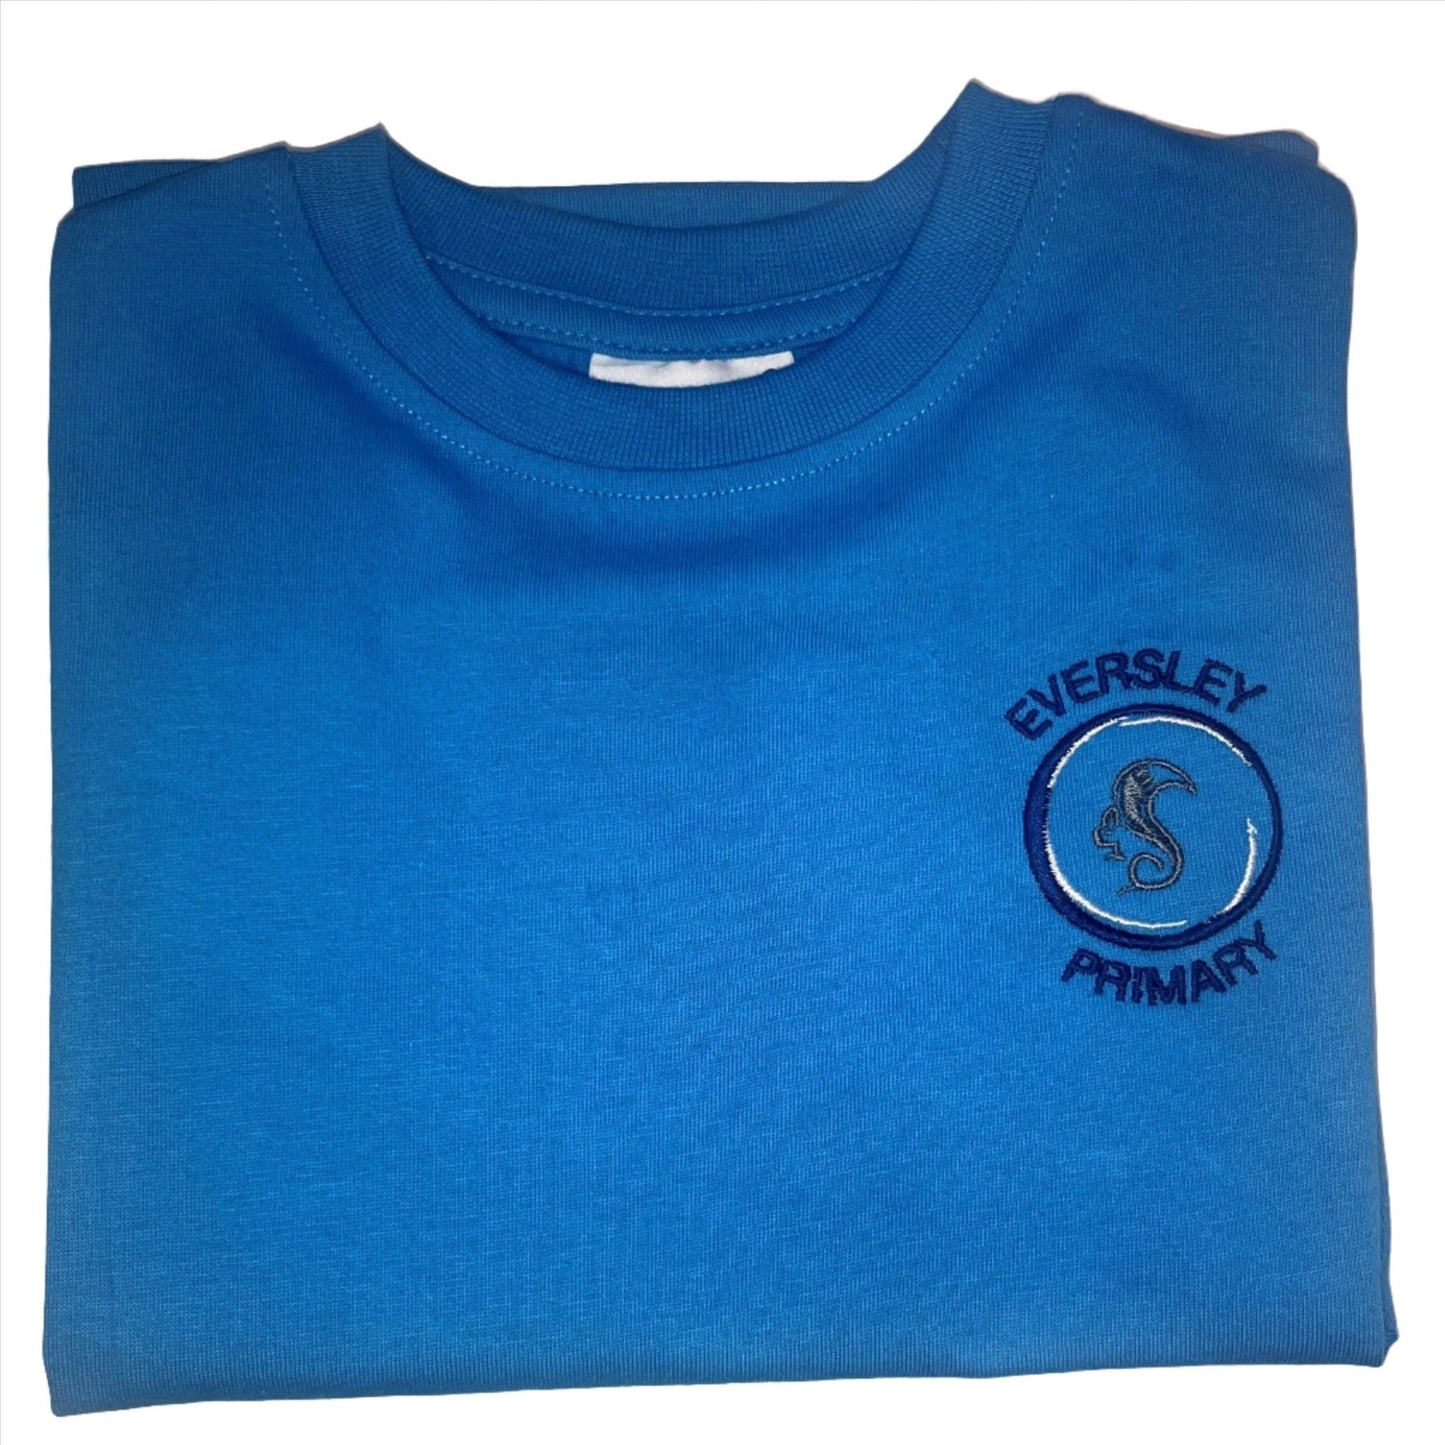 Eversley Primary School PE Top - Uniformwise Schoolwear